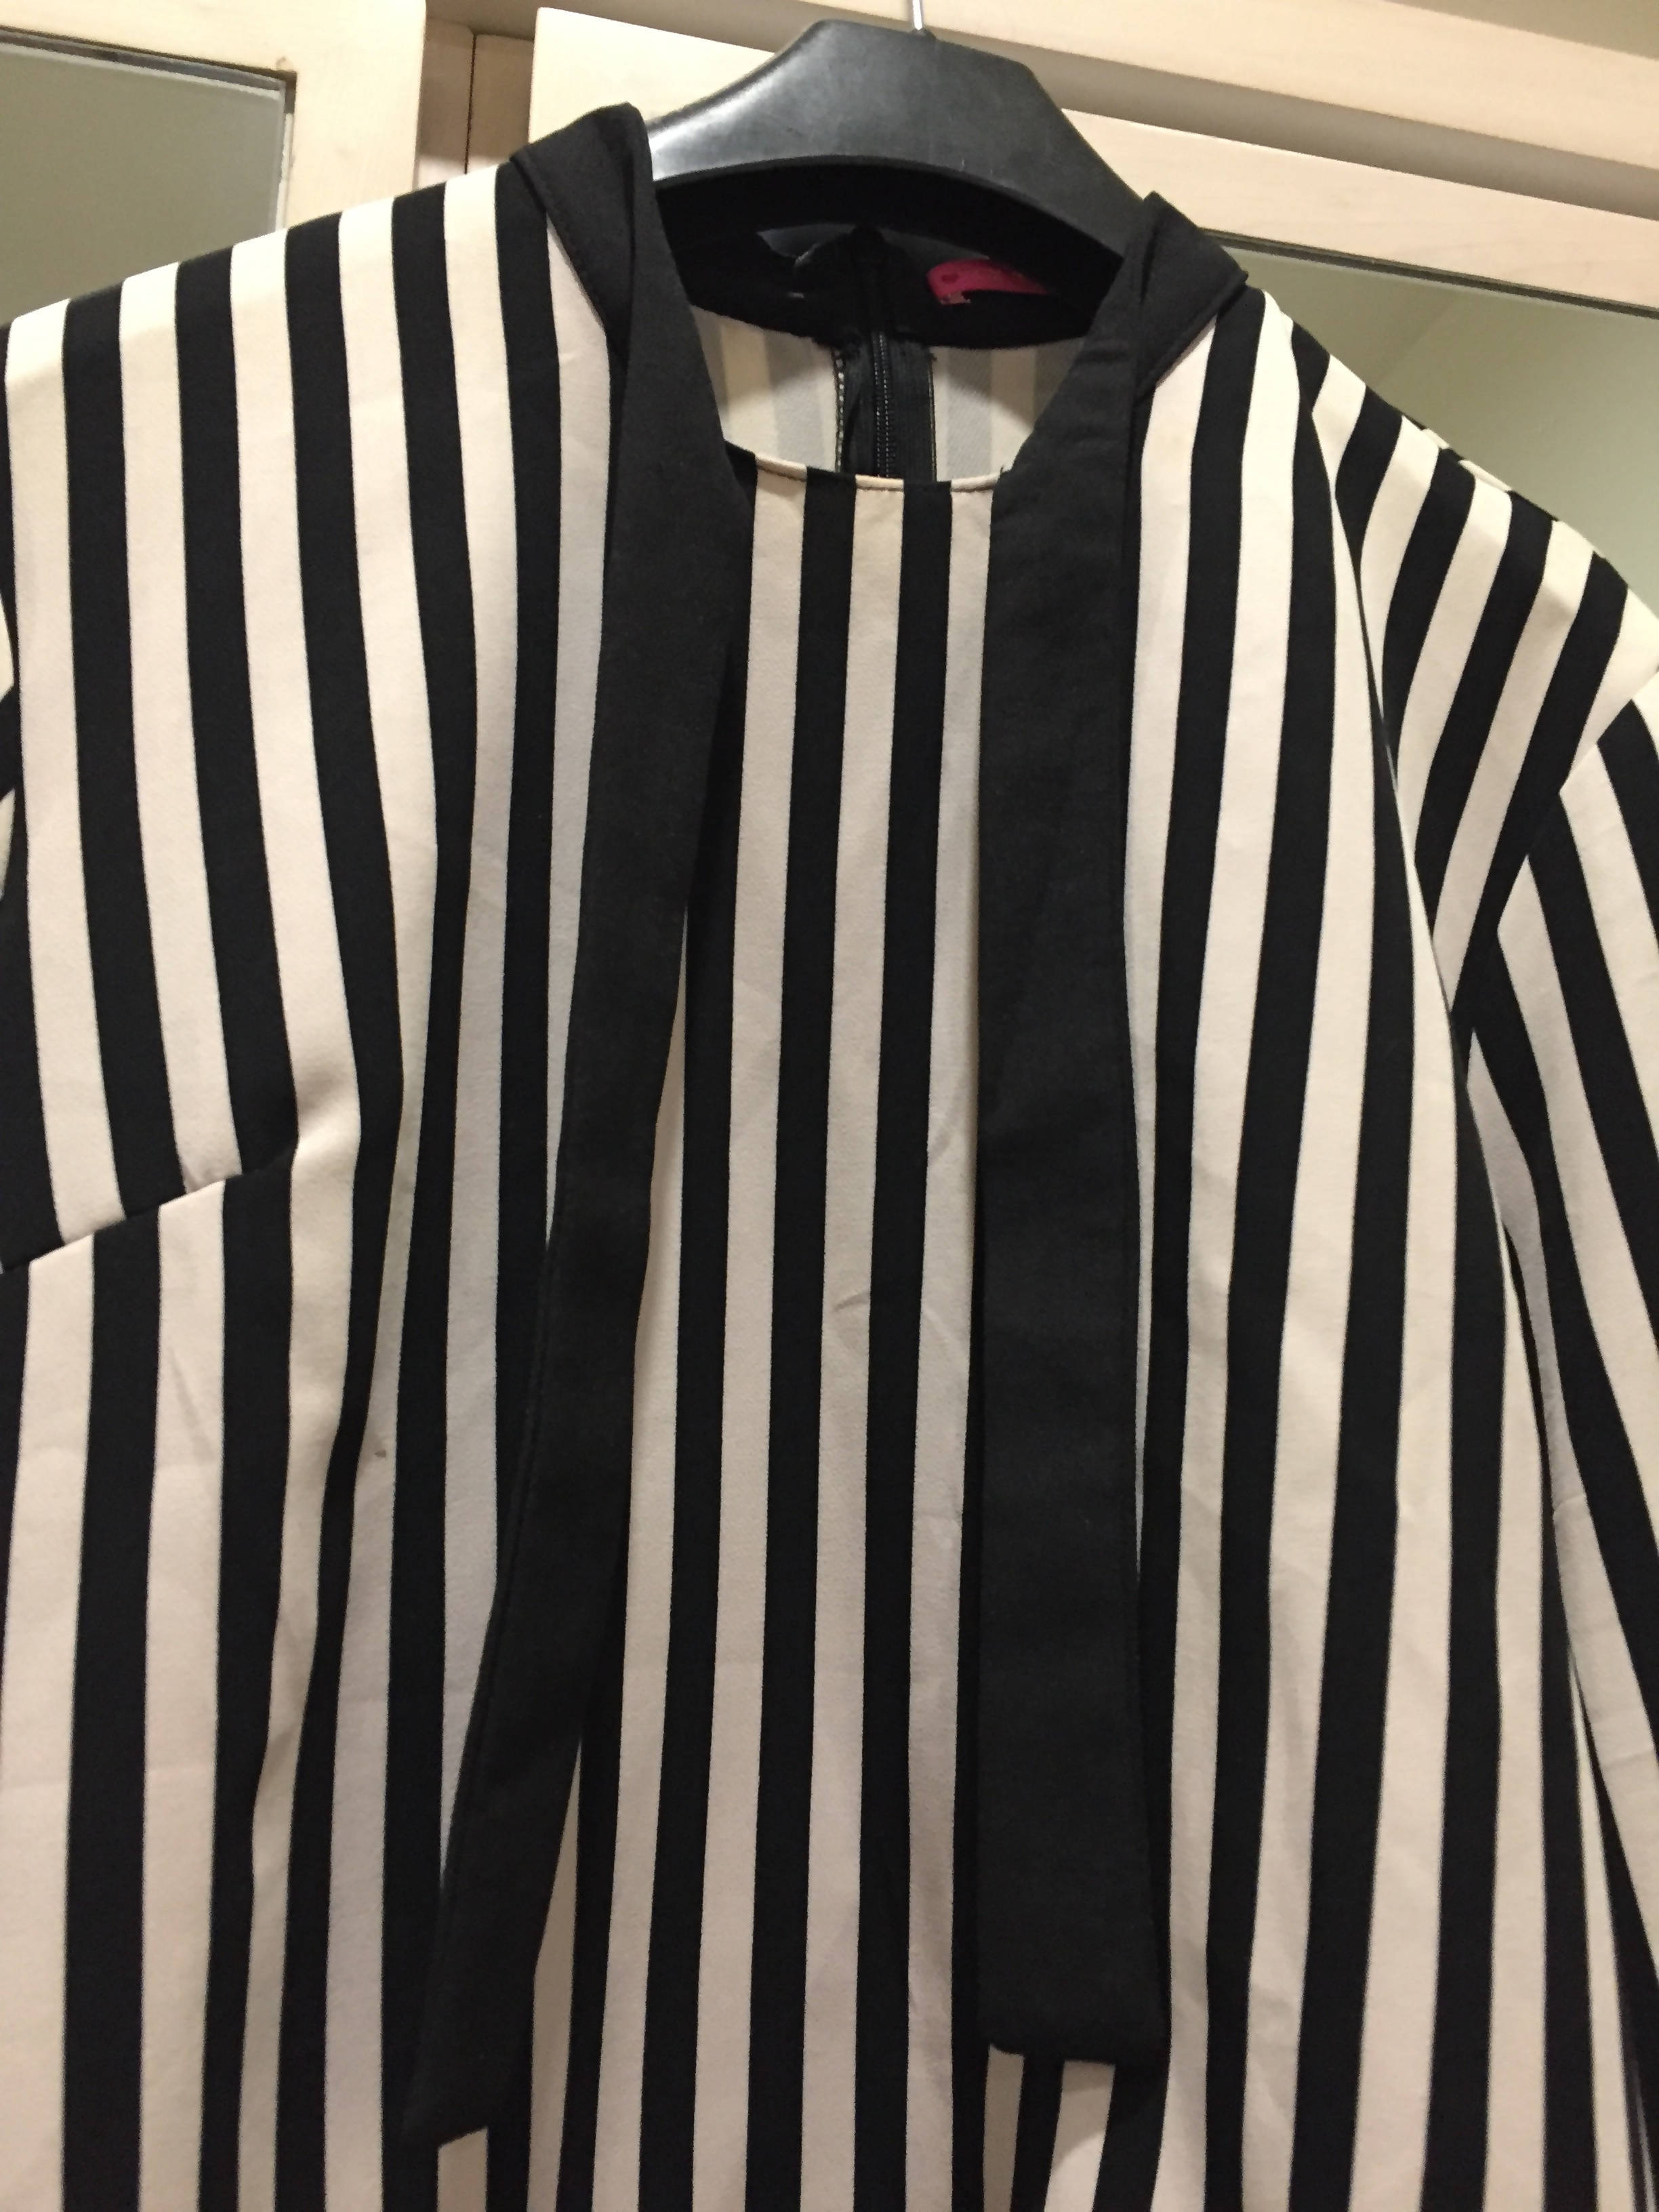 Splash | Black & white striped top | Women Tops & Shirts | Brand New